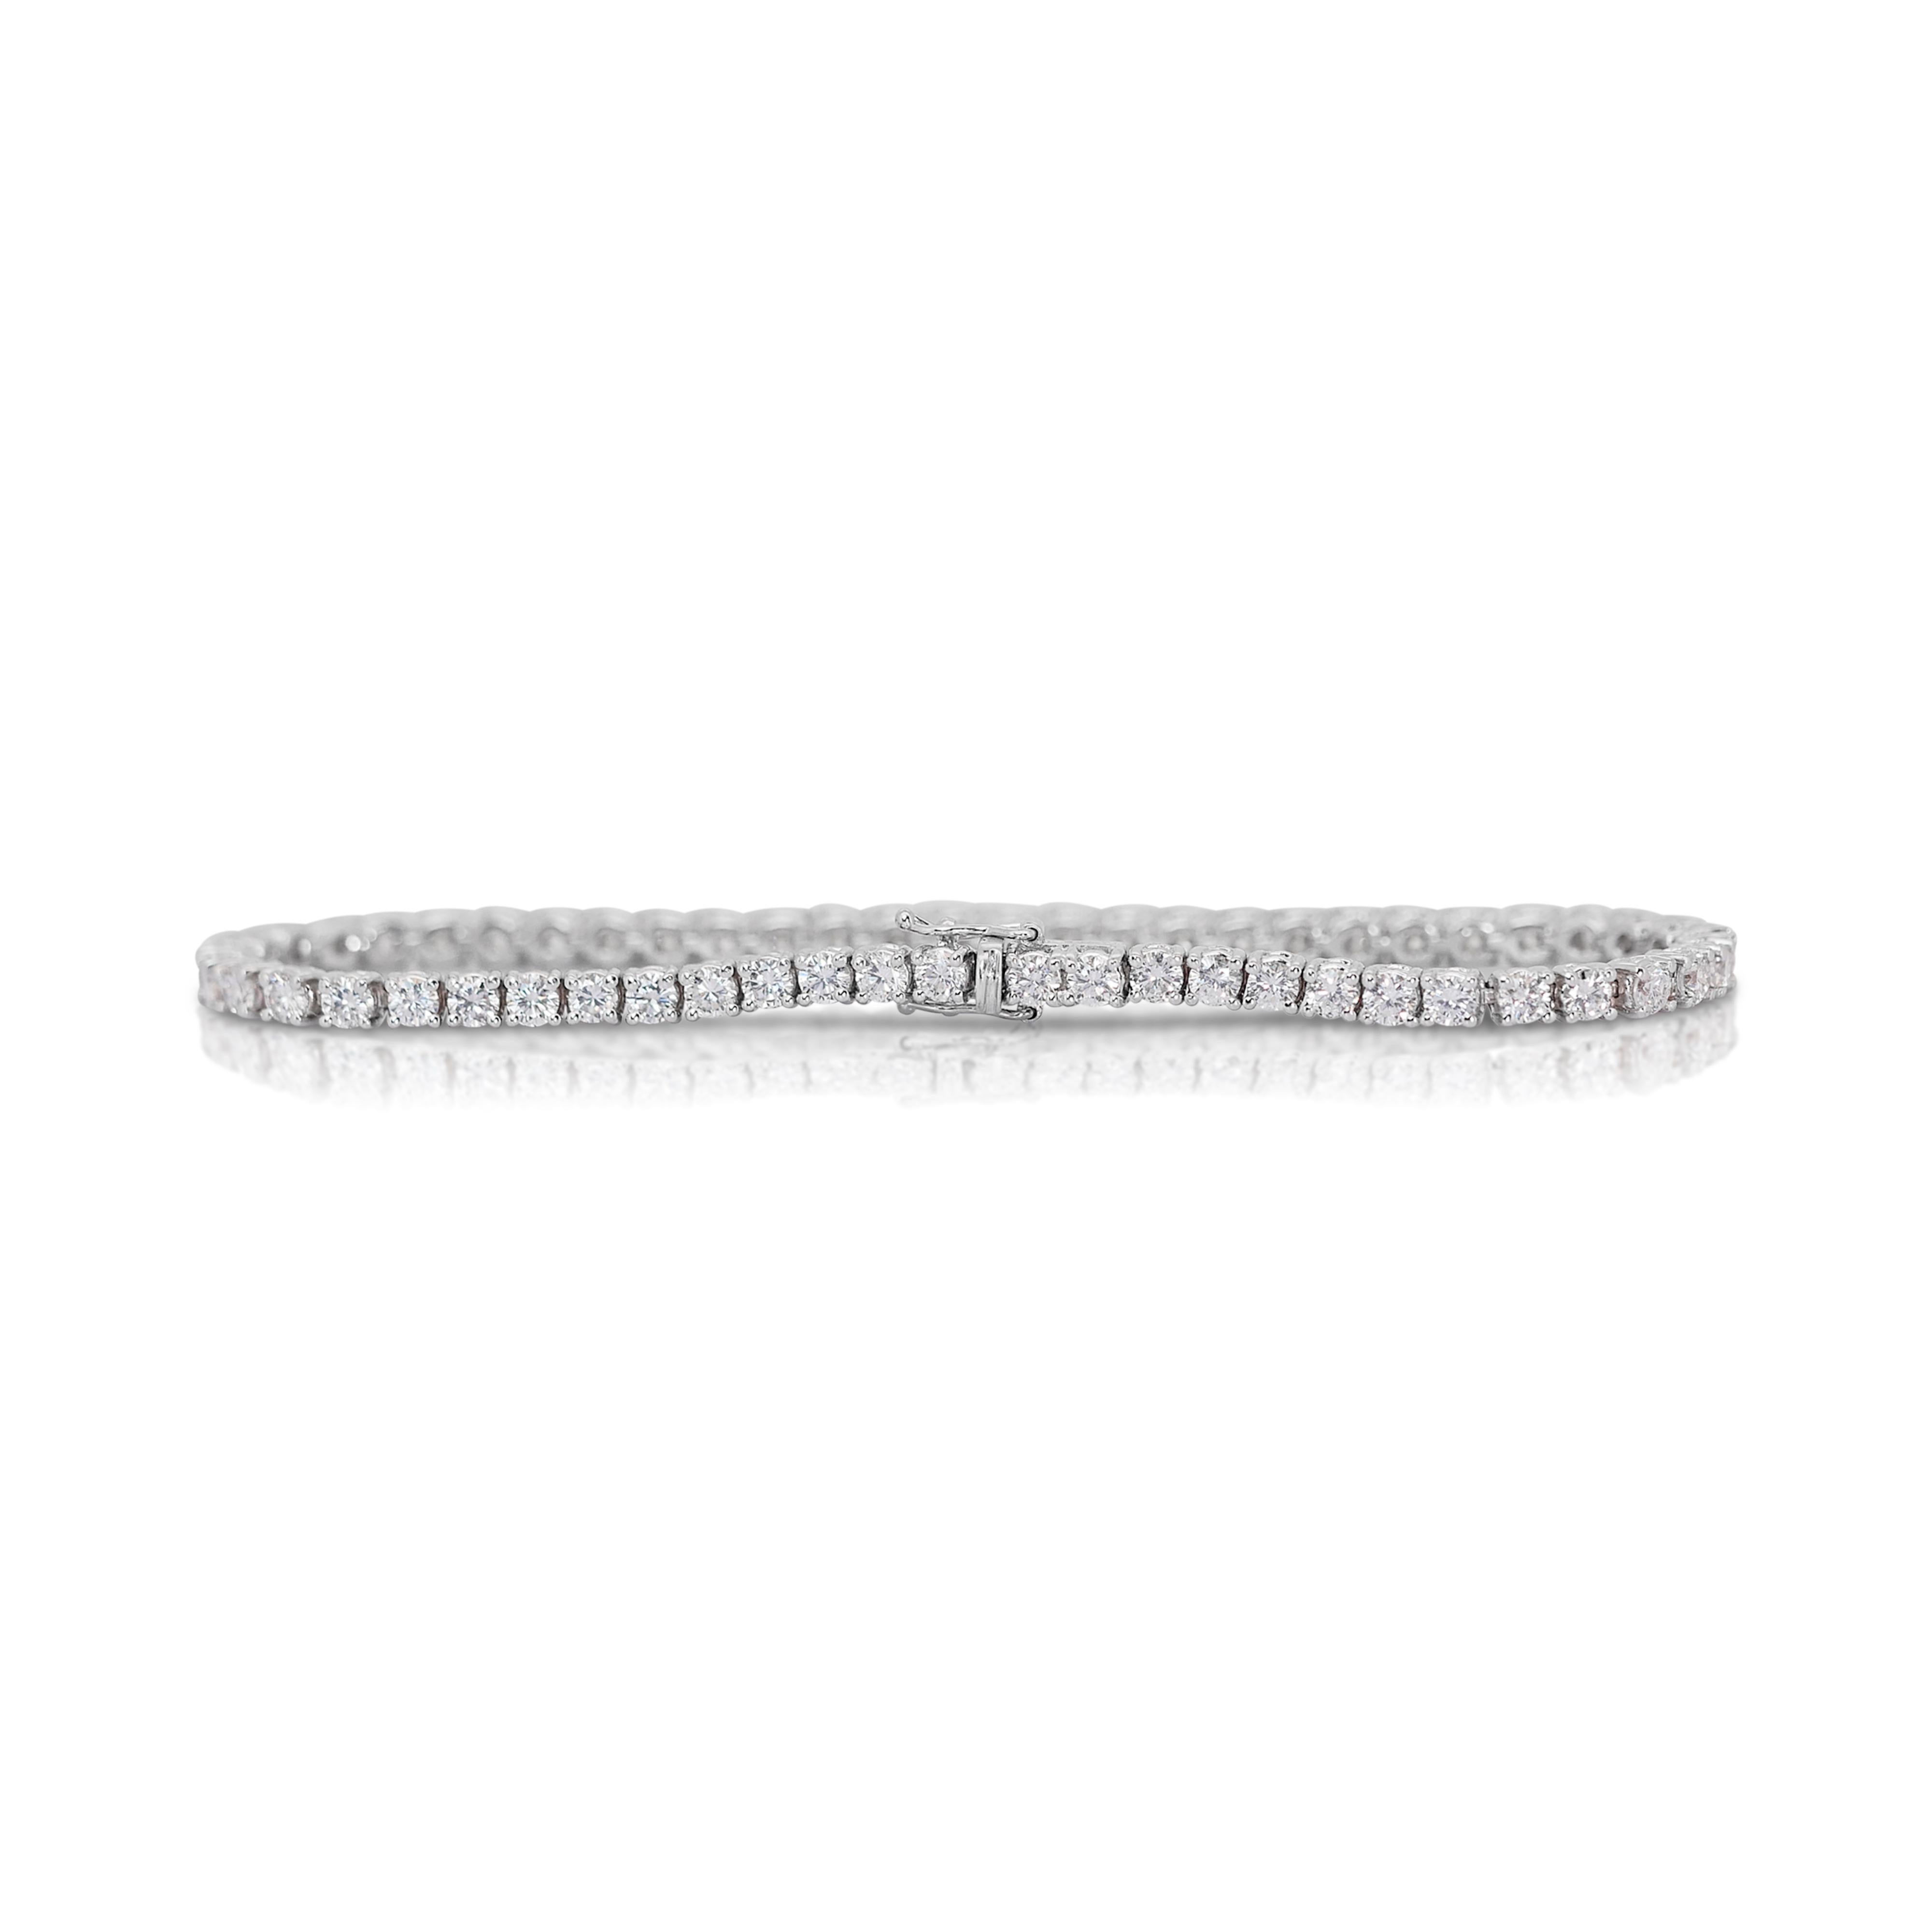 Radiant 5.32ct Diamonds Tennis Bracelet in 14k White Gold - IGI Certified In New Condition For Sale In רמת גן, IL